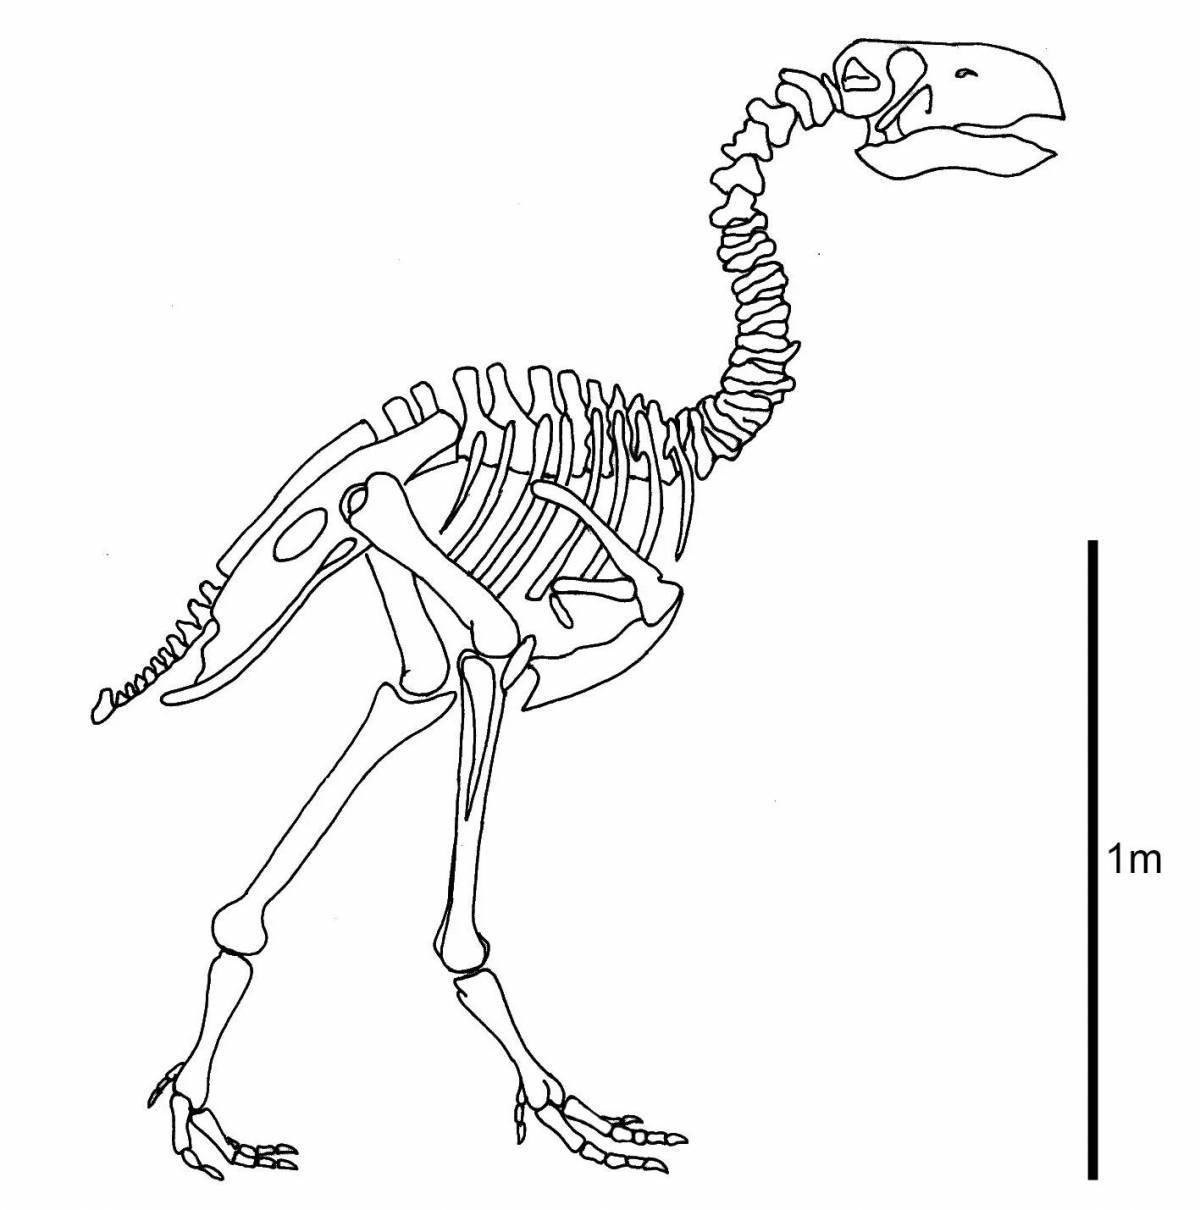 Dinosaur magic bones coloring page